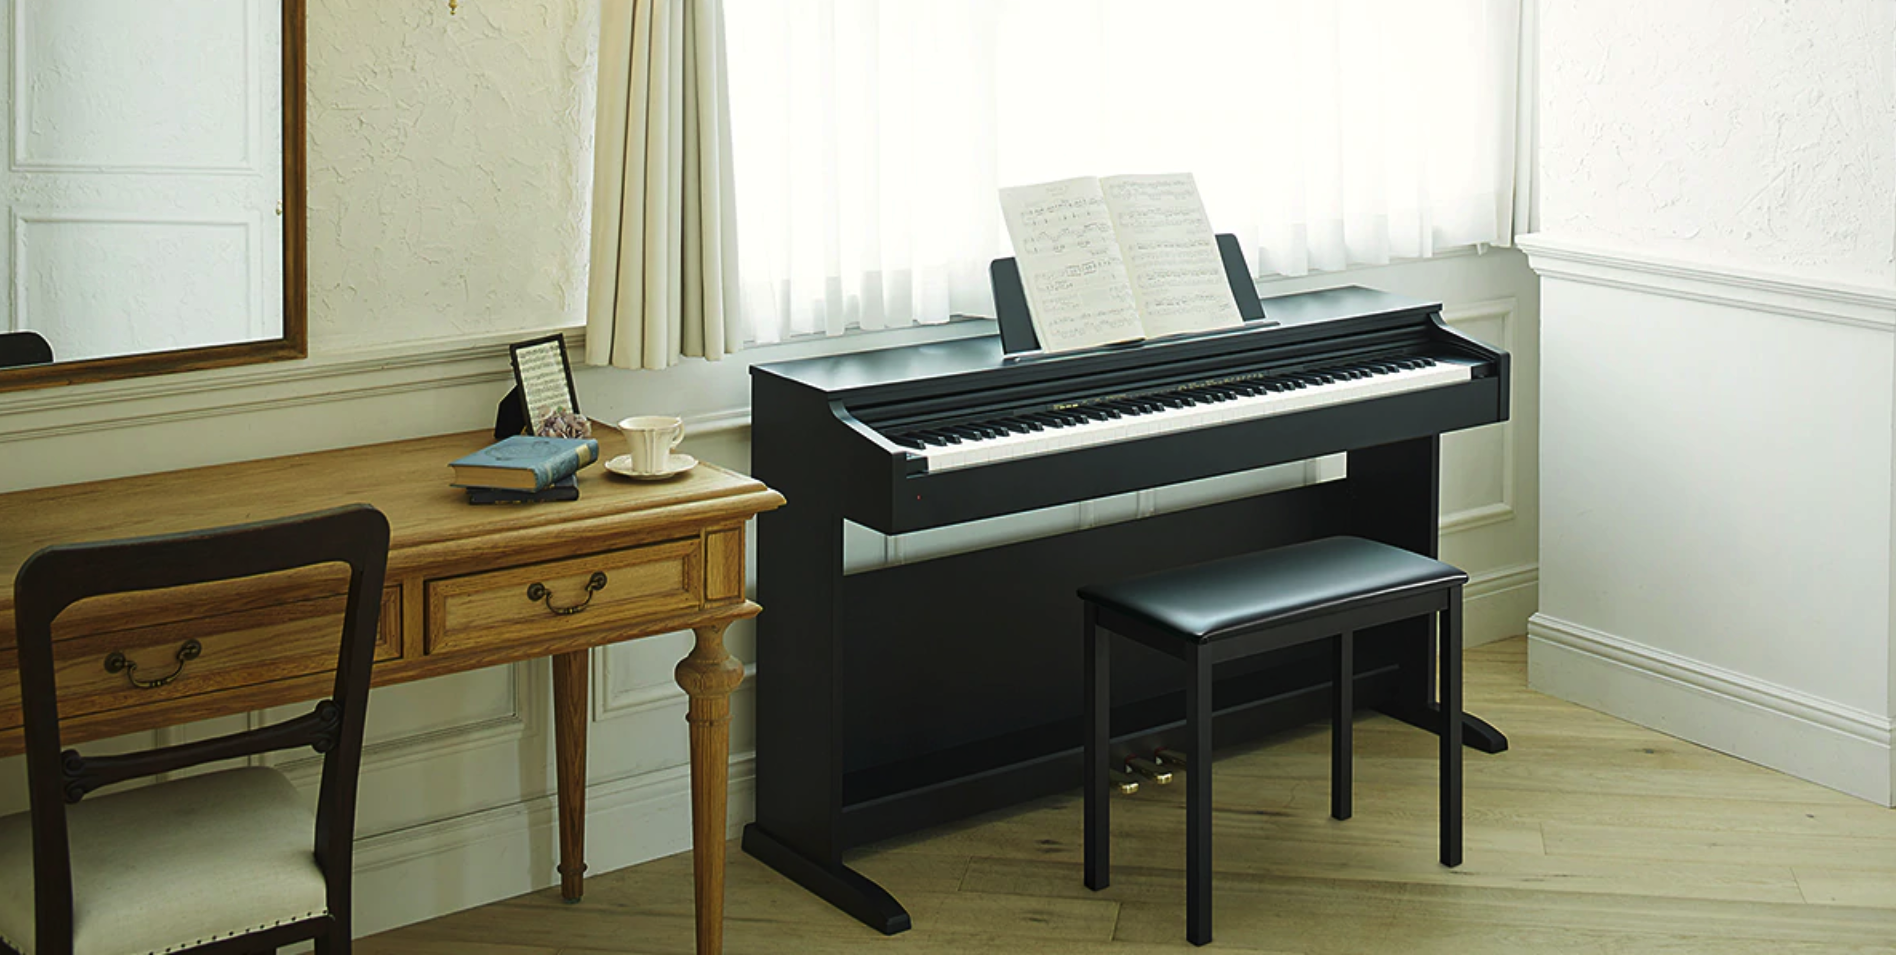 Casio AP-270 Celviano Digital Upright Piano with Bench - Black